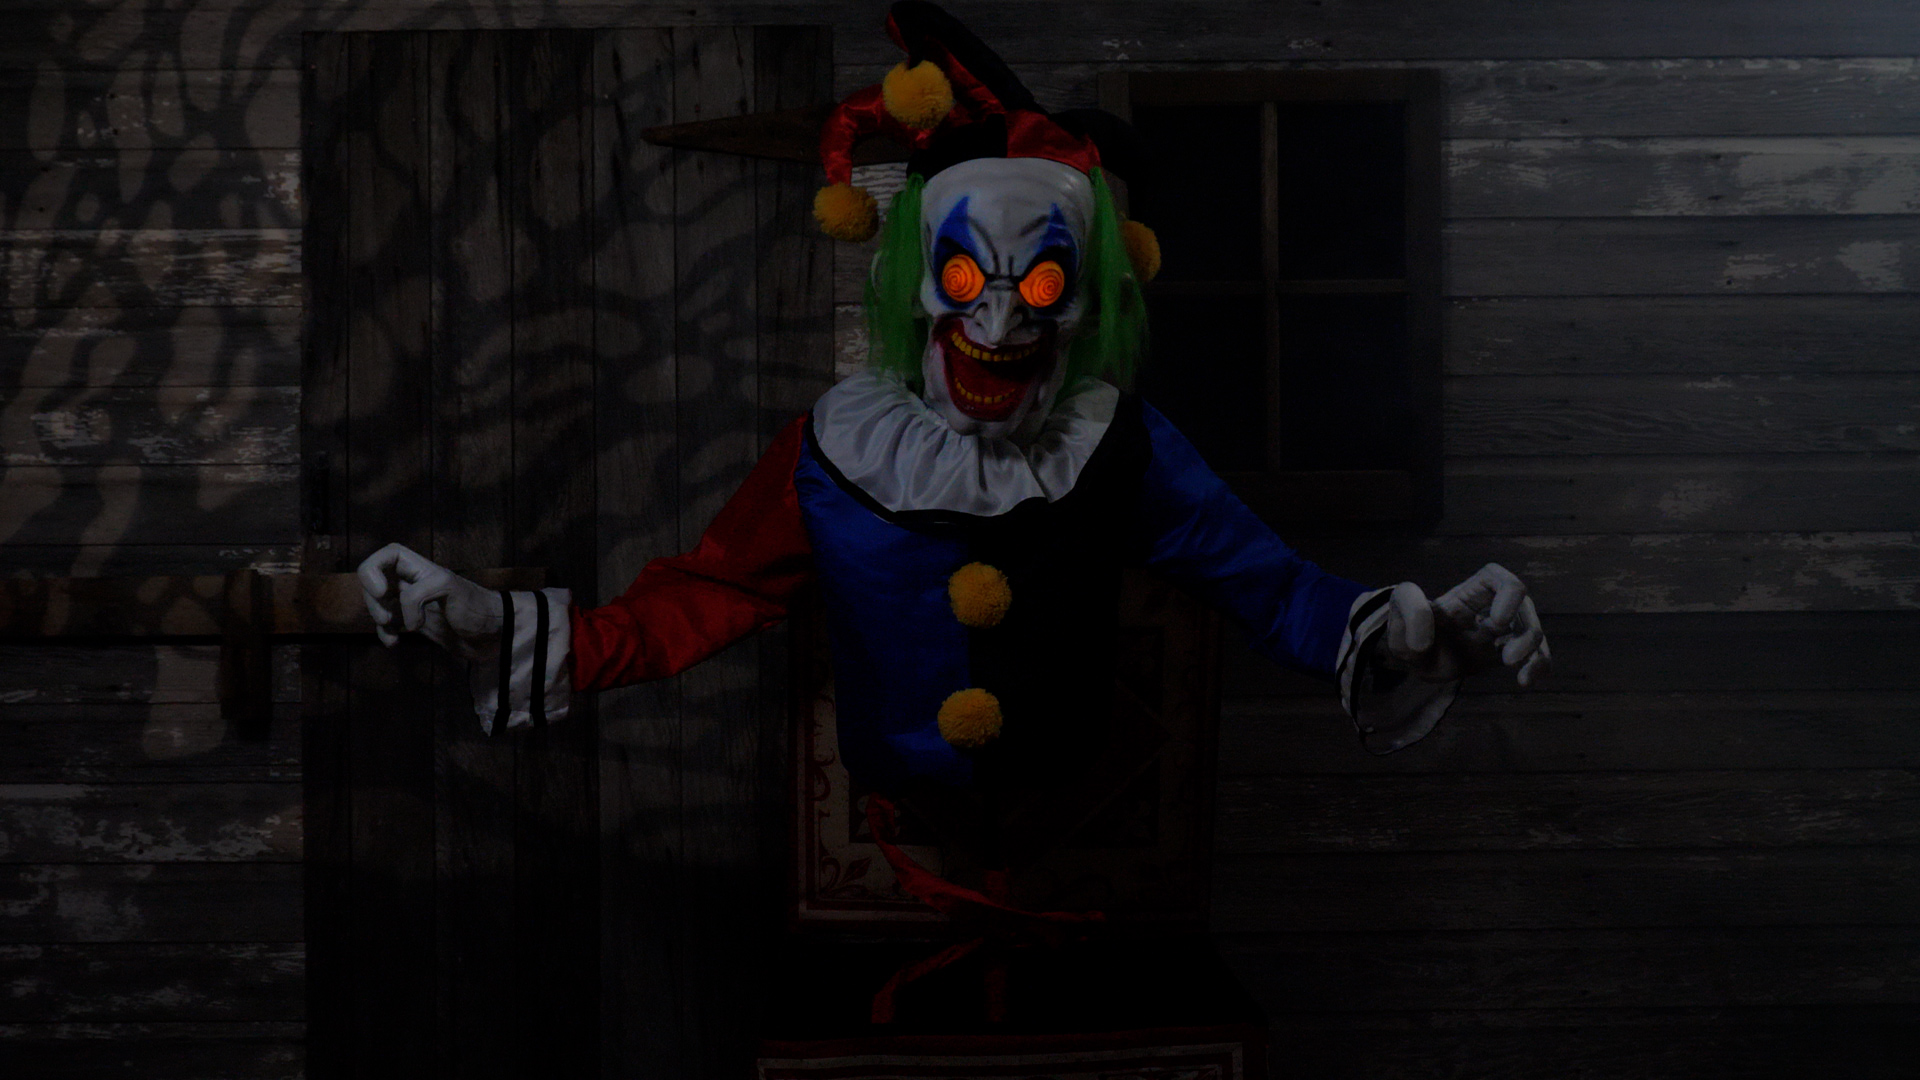 Jack in the Box Clown Kid's Costume